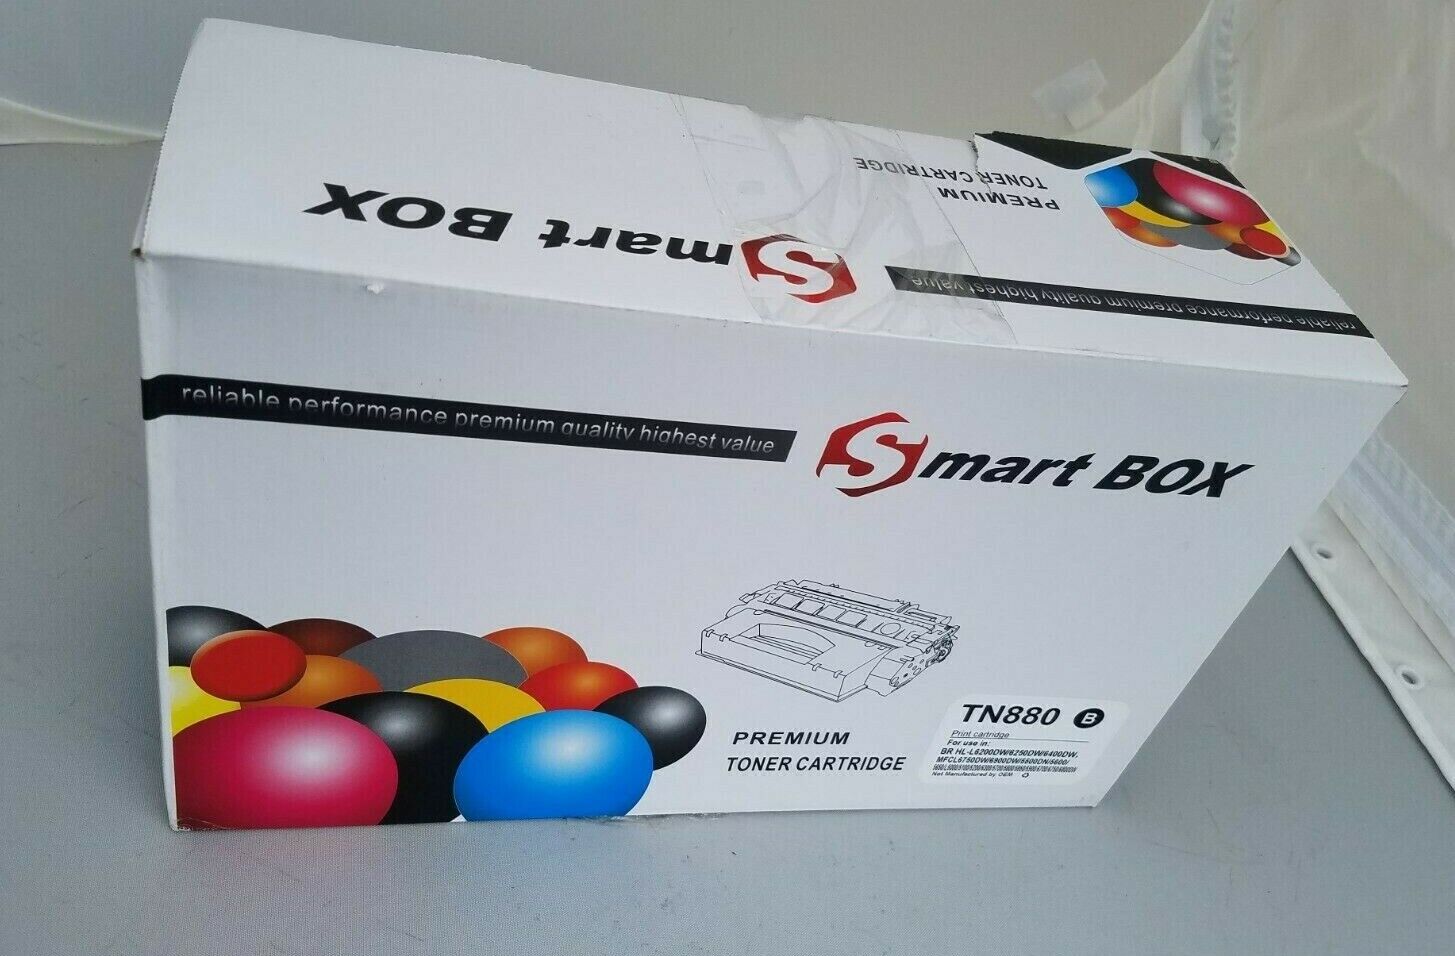 Smart Box Premium Toner Cartridge TN-880 - Black